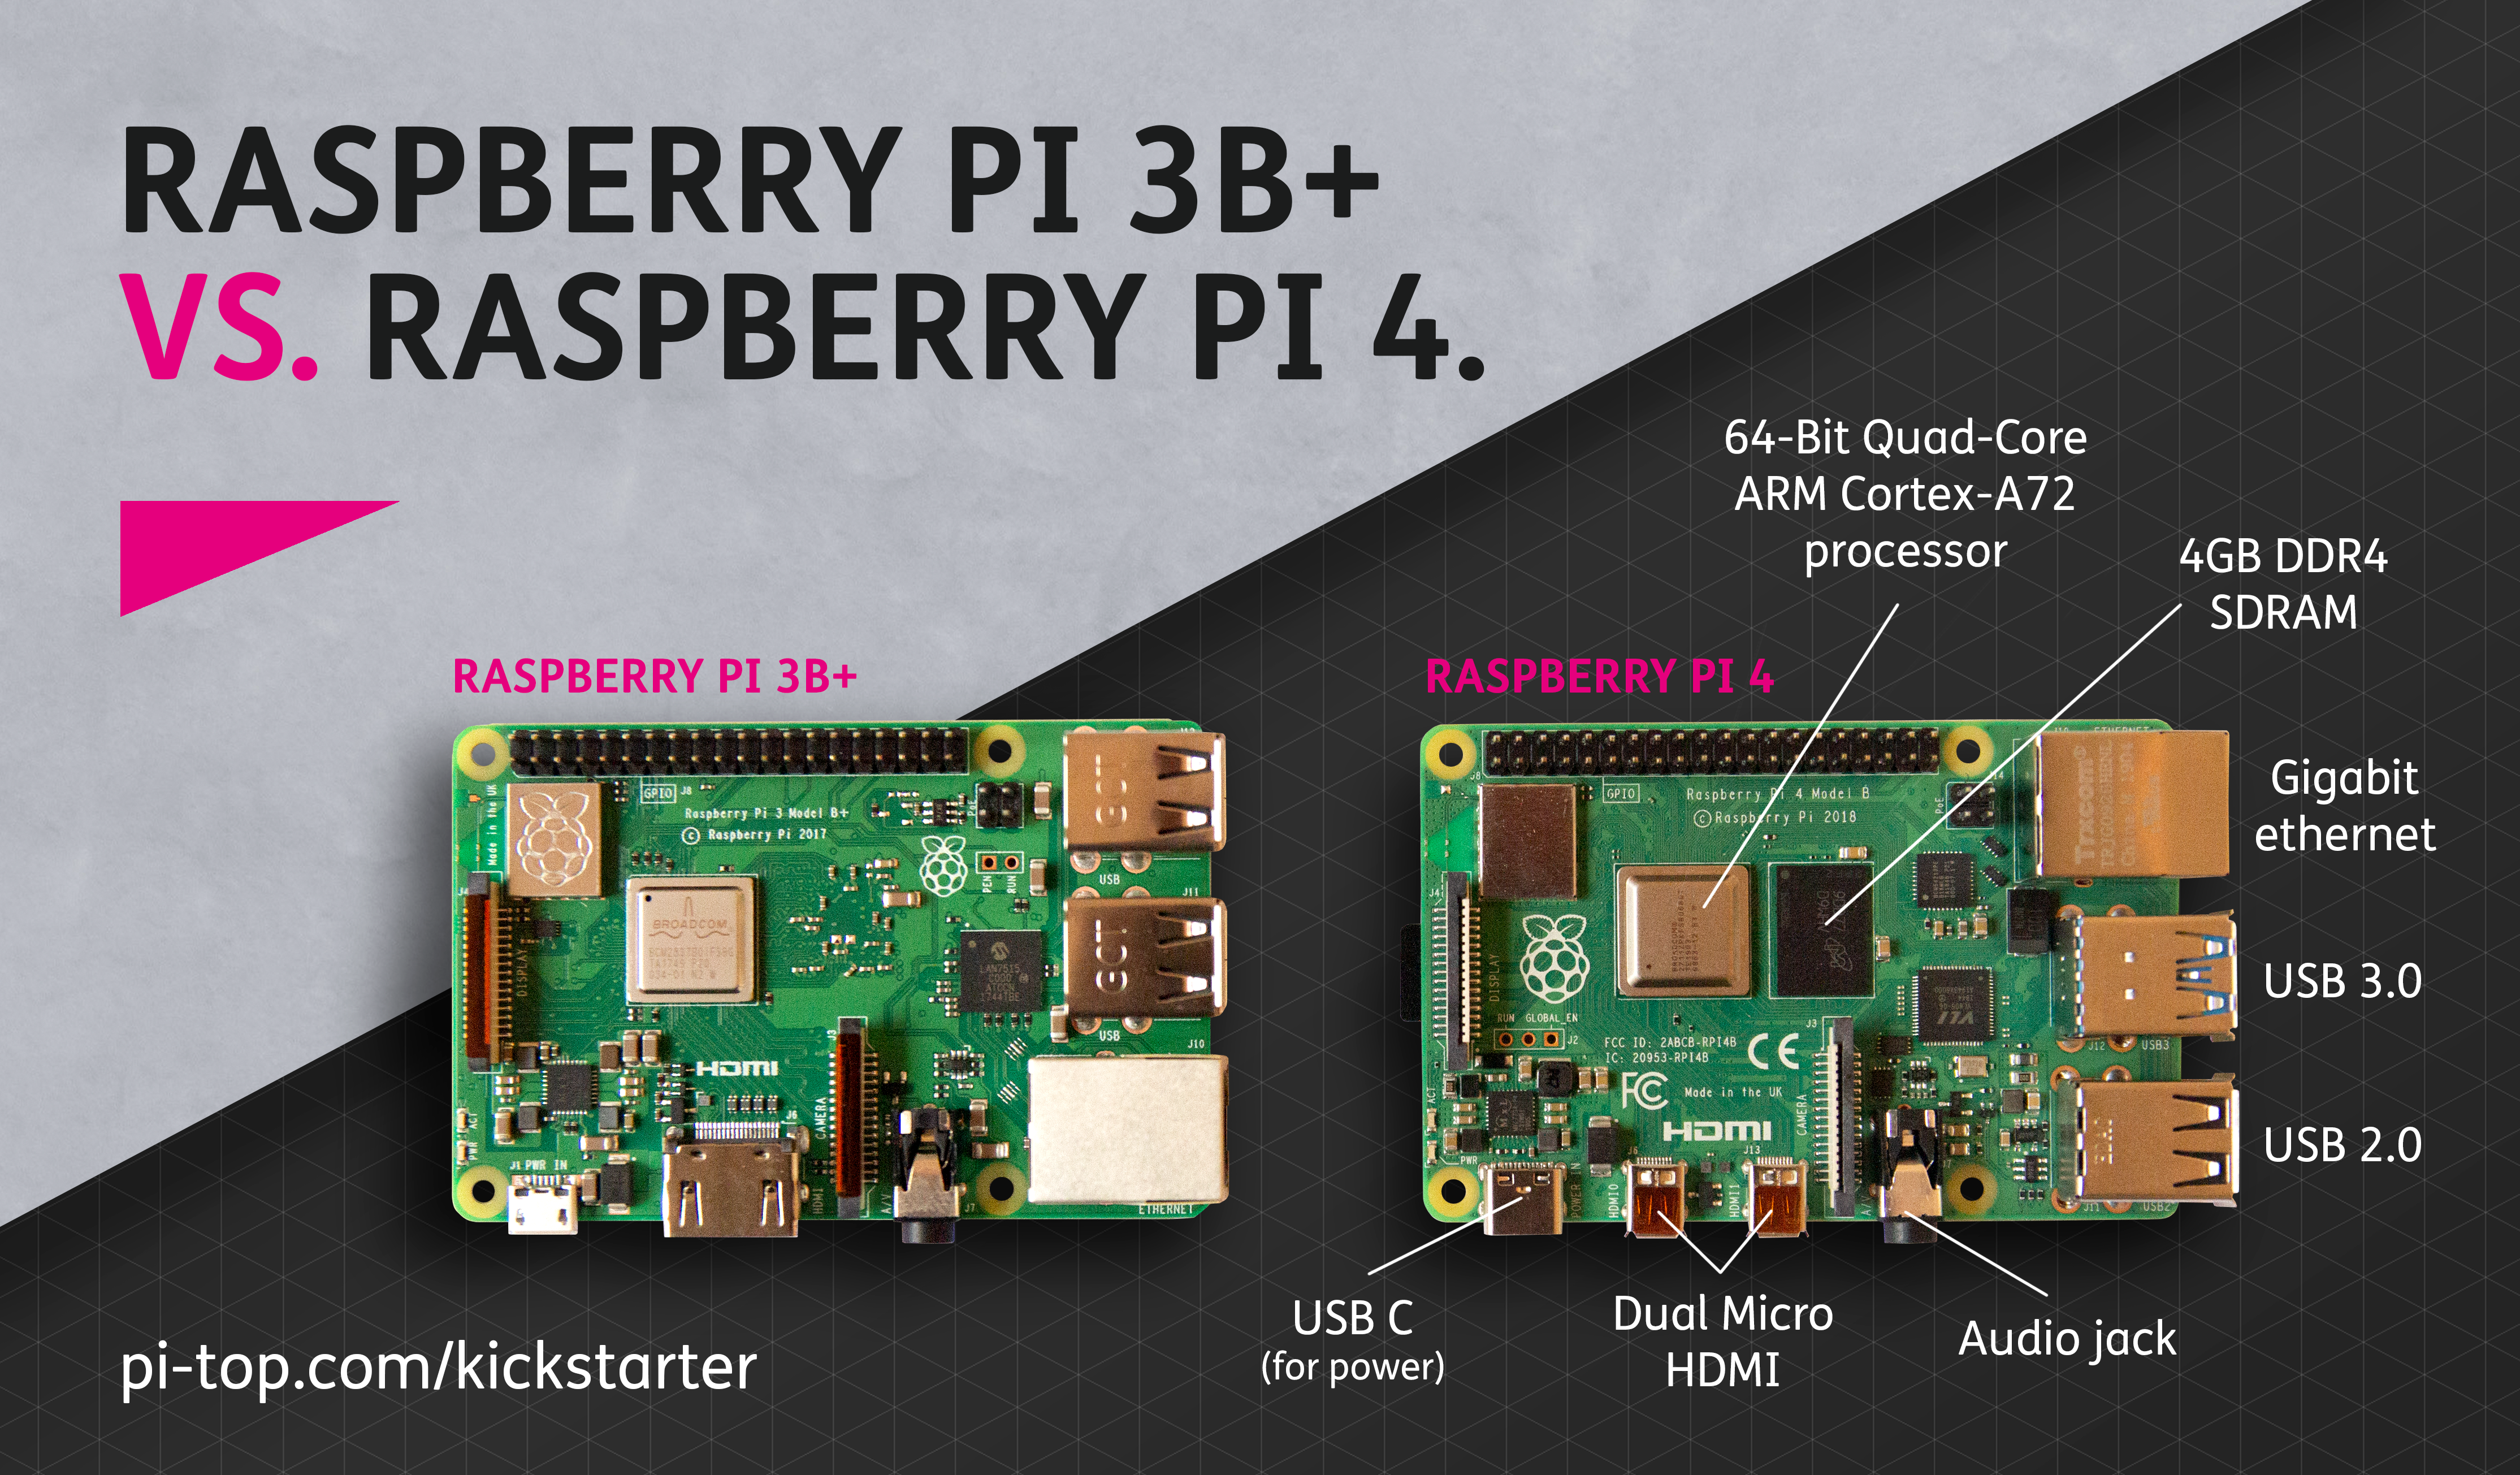 Raspberry Pi 3B+ vs 3B